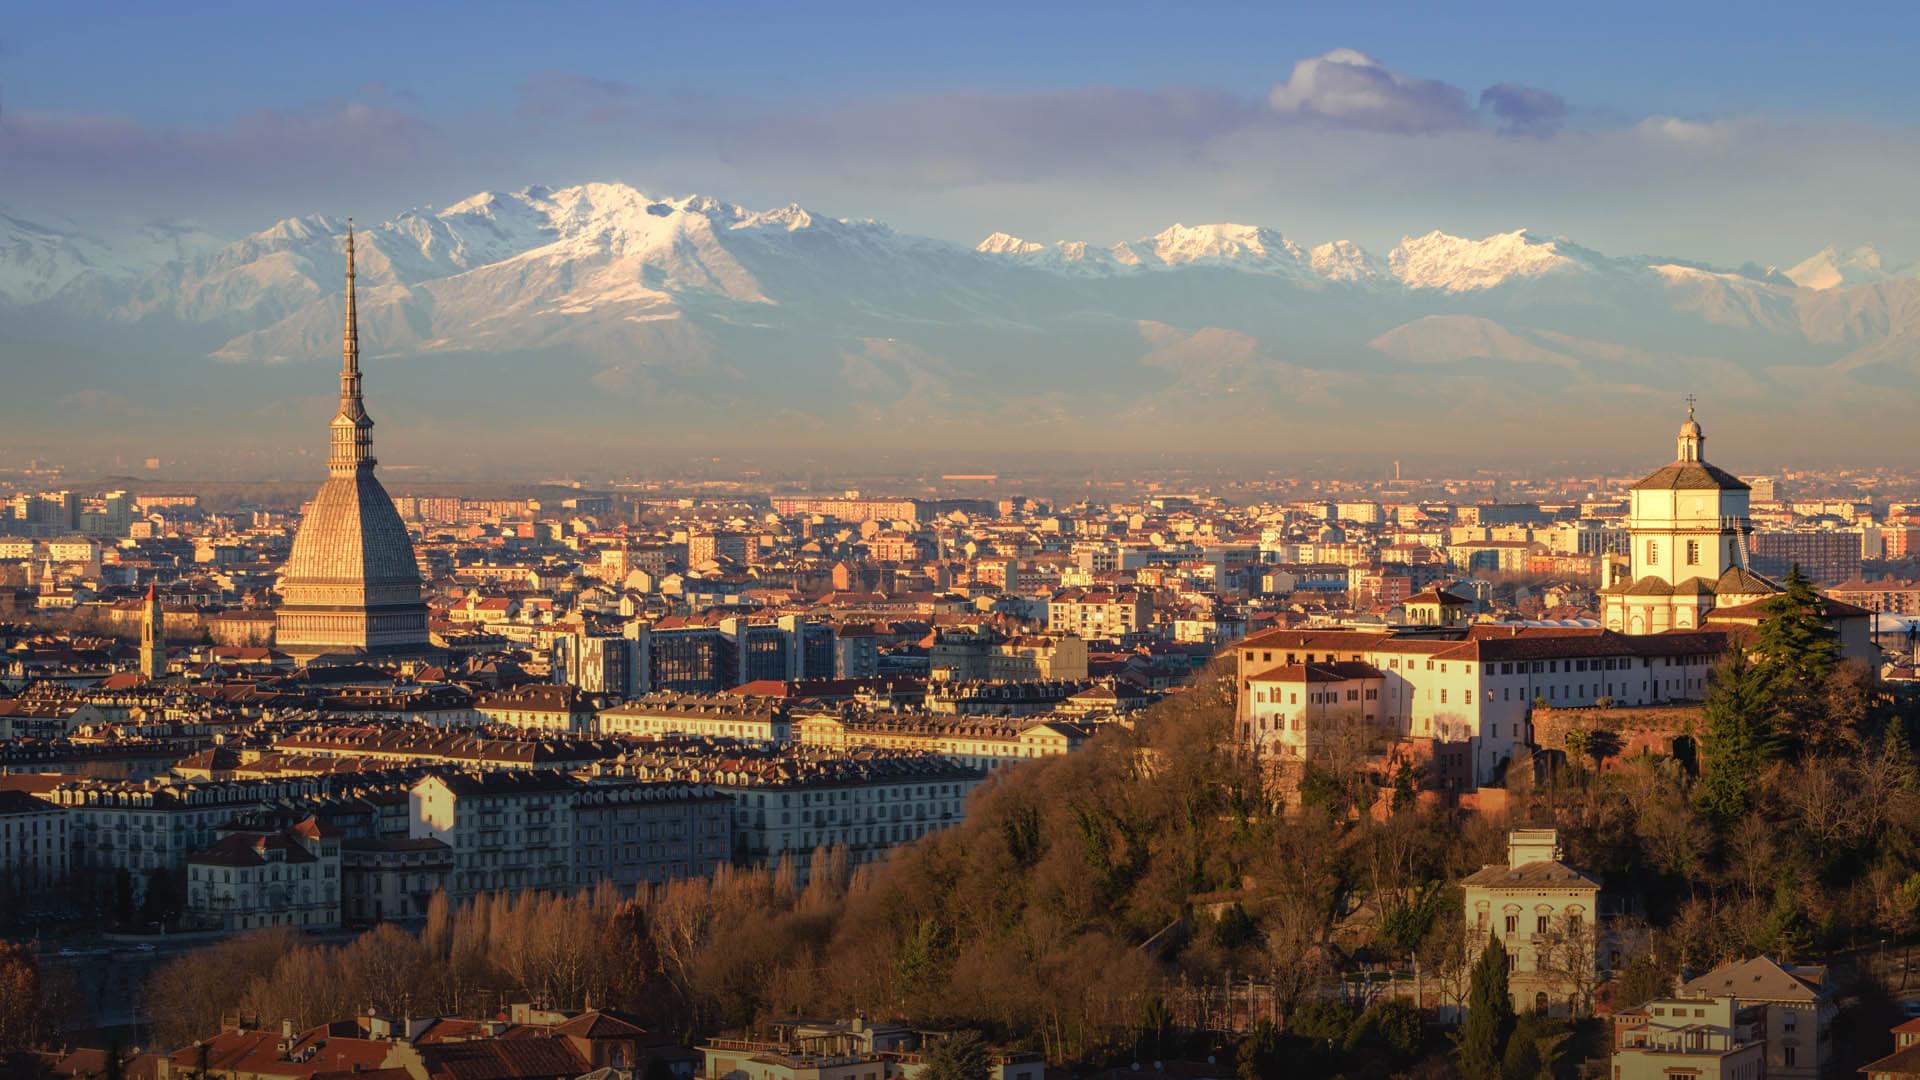 Piedmont Turin